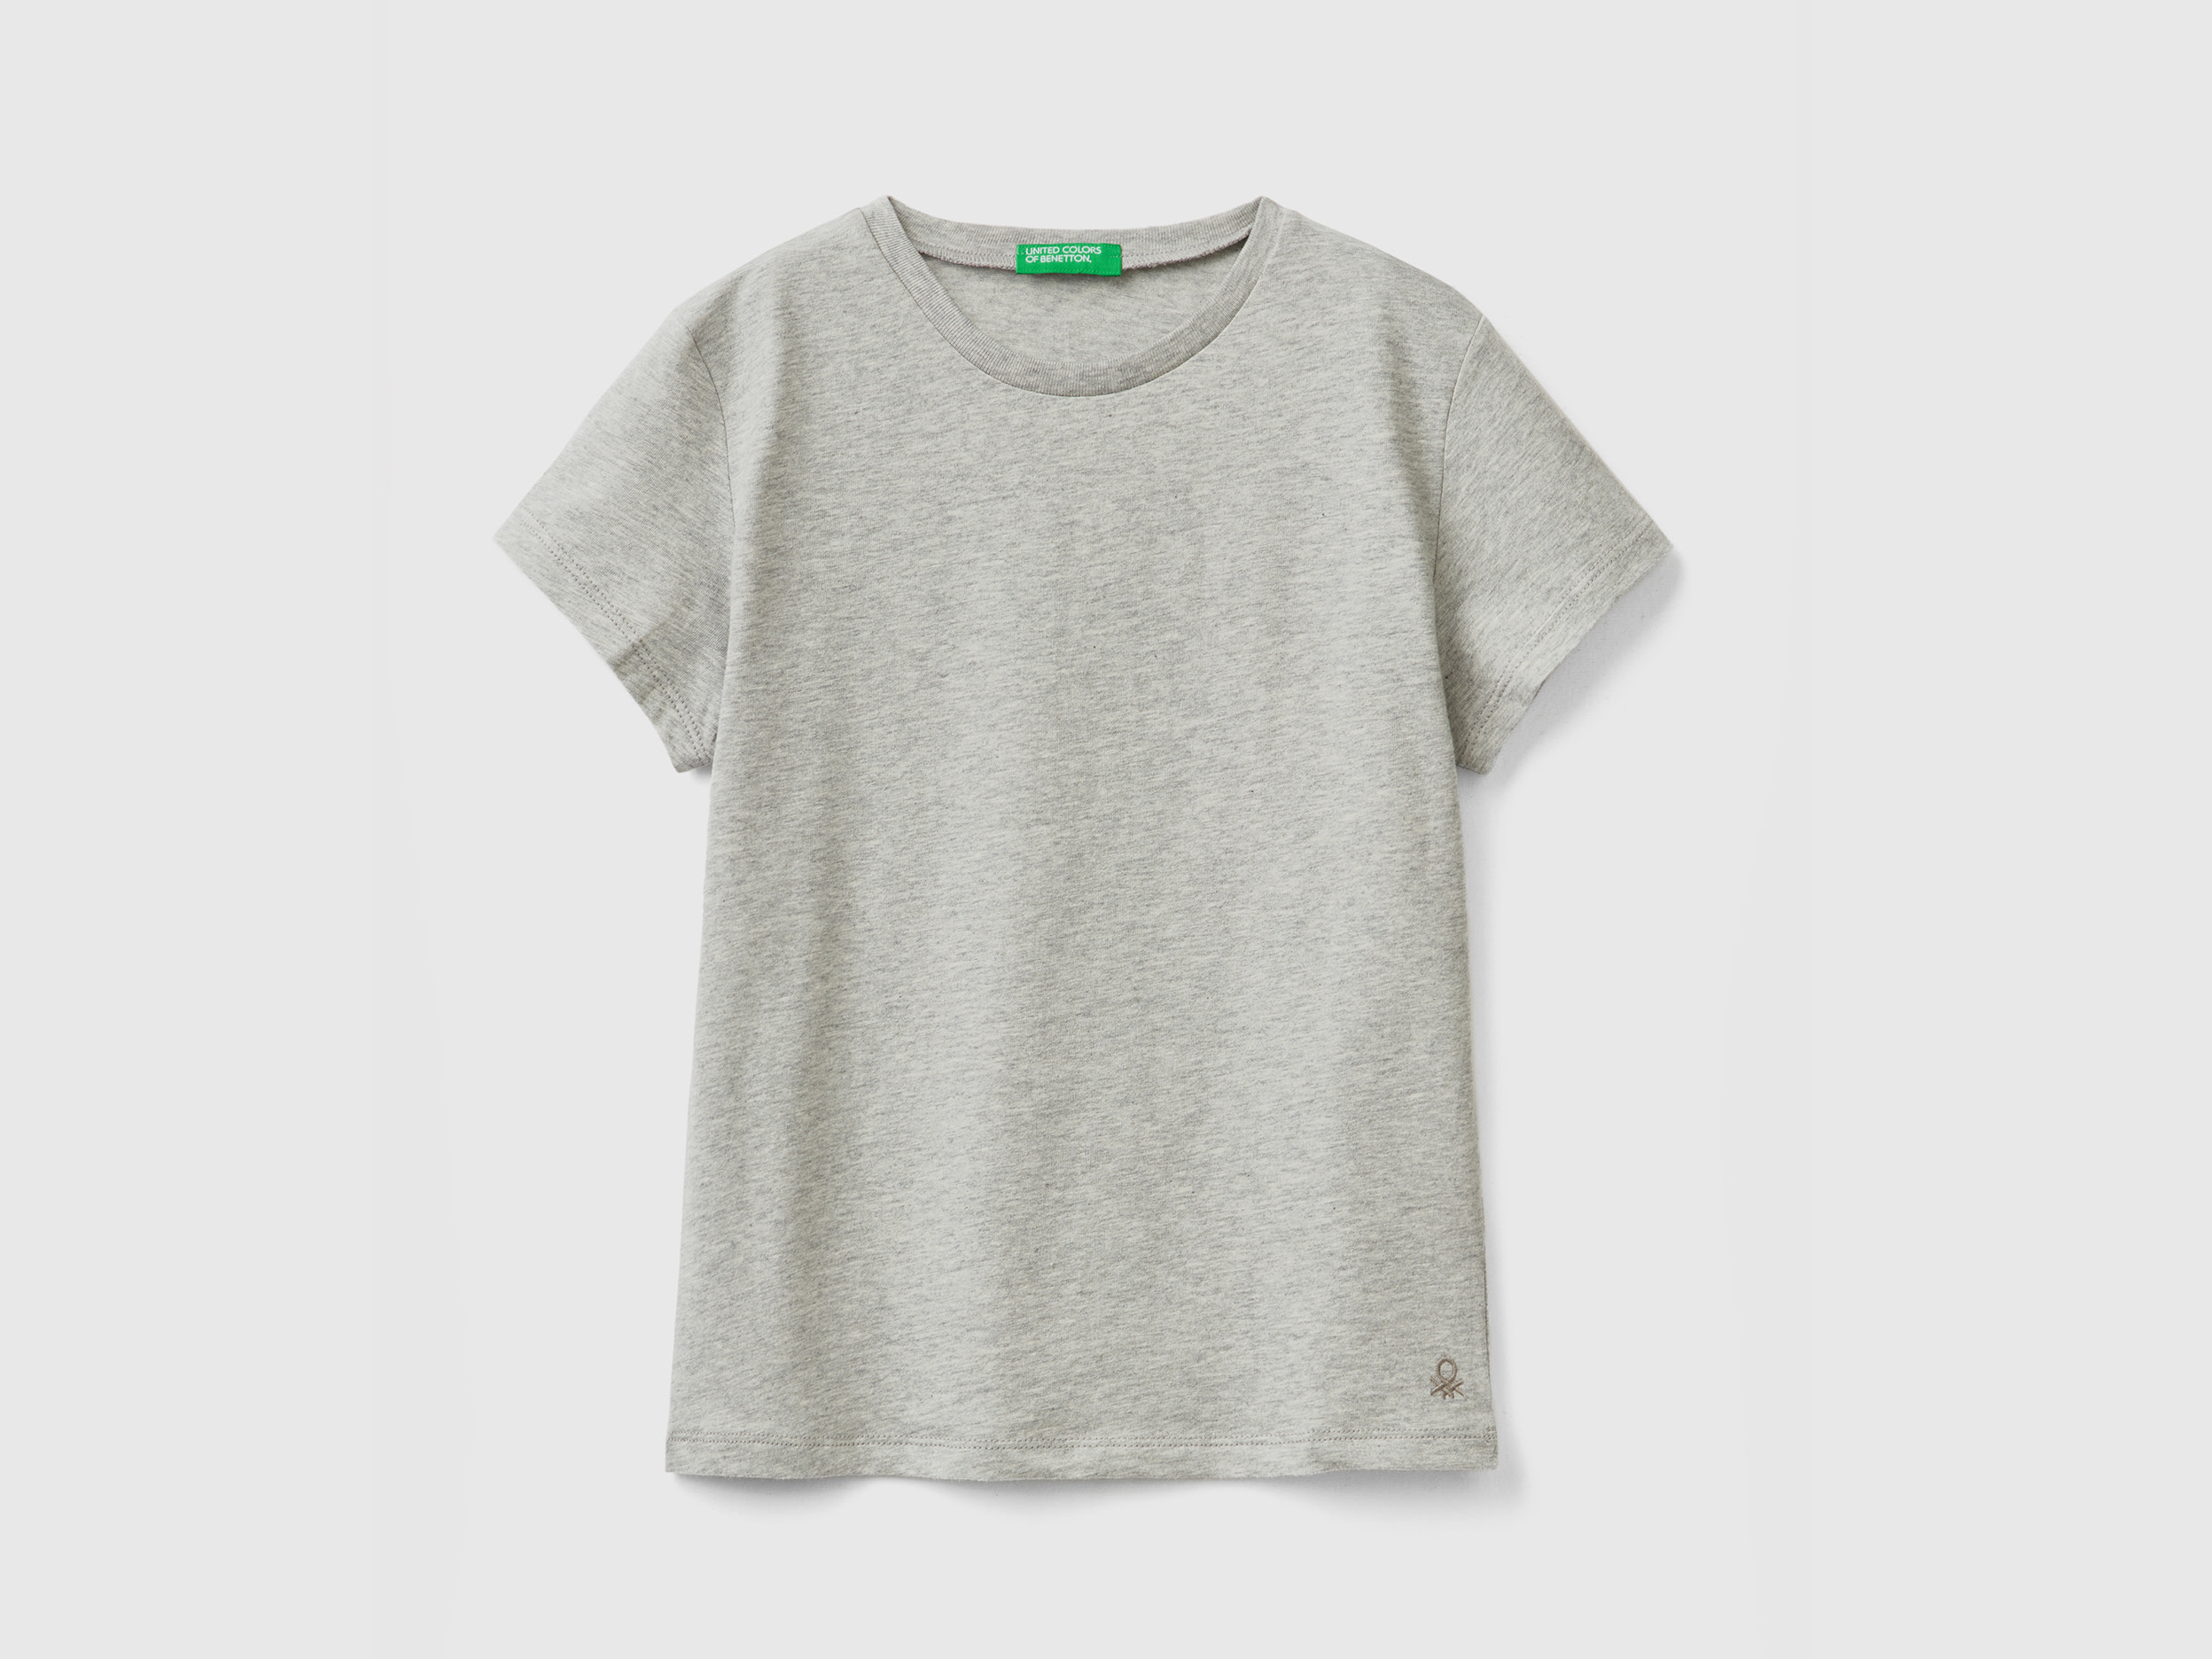 Image of Benetton, T-shirt In Pure Organic Cotton, size 3XL, Light Gray, Kids